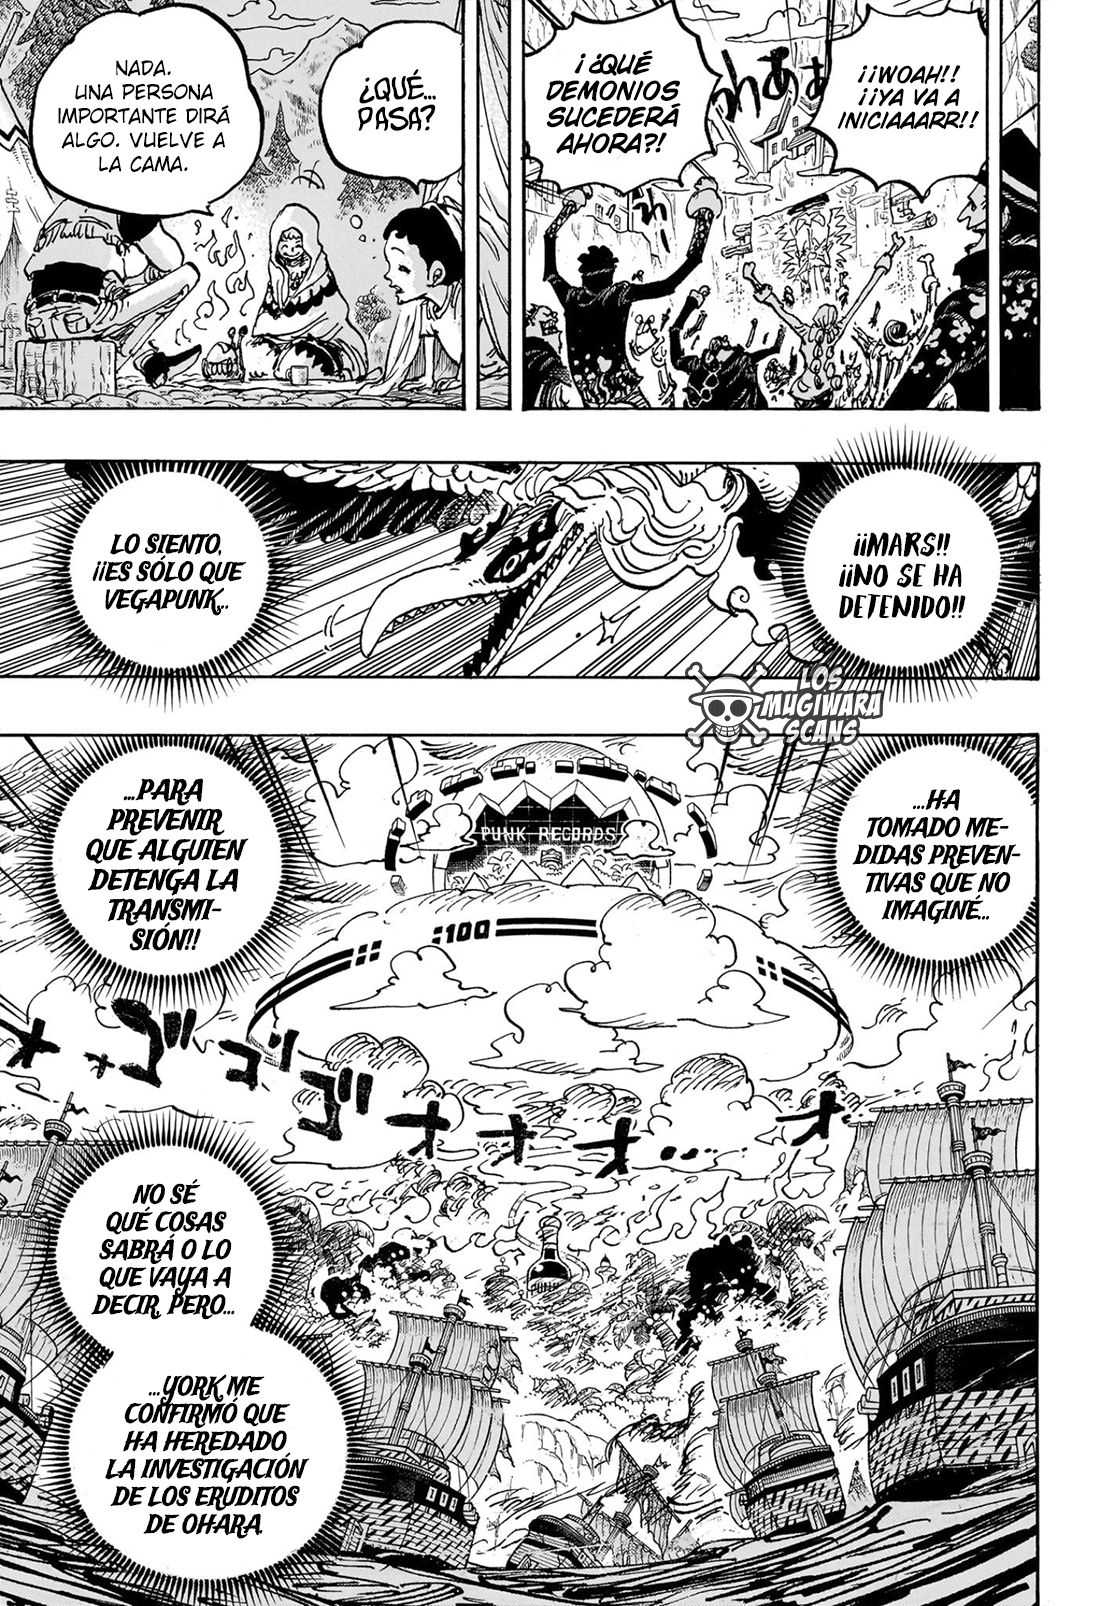 español - One Piece Manga 1113 [Español] 06